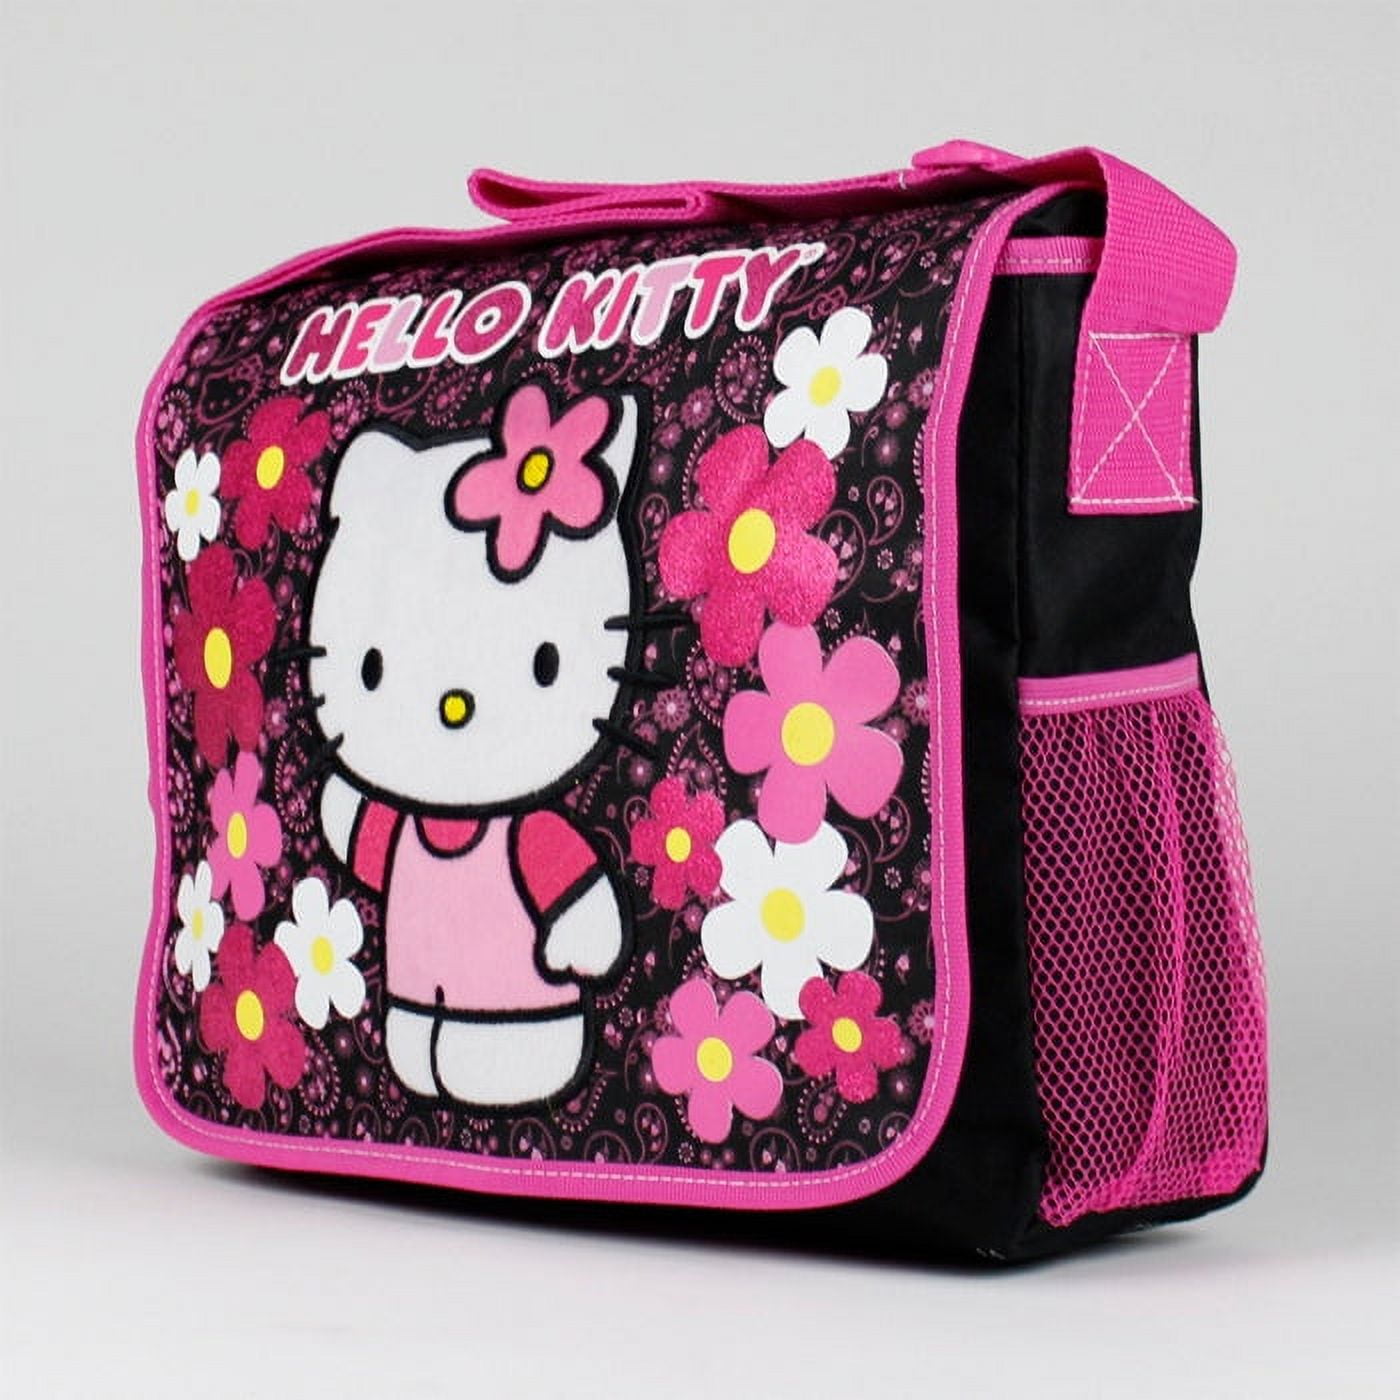 Messenger Bag - Hello Kitty - Super Sweet New School Book Bag Boys 630393